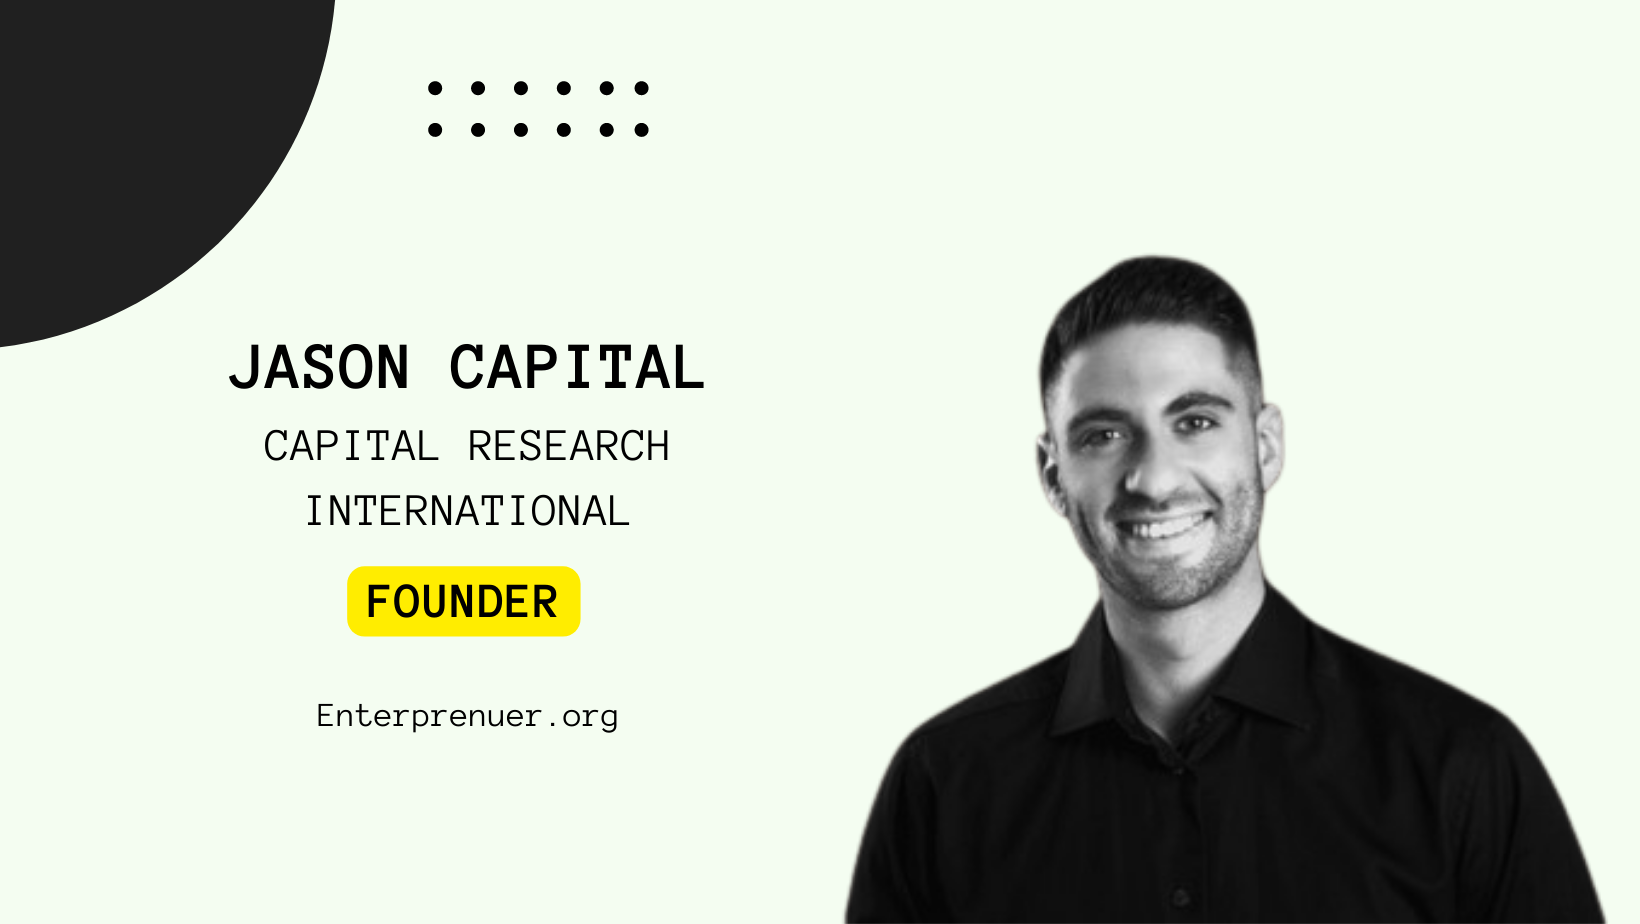 Jason Capital Founder of Capital Research International